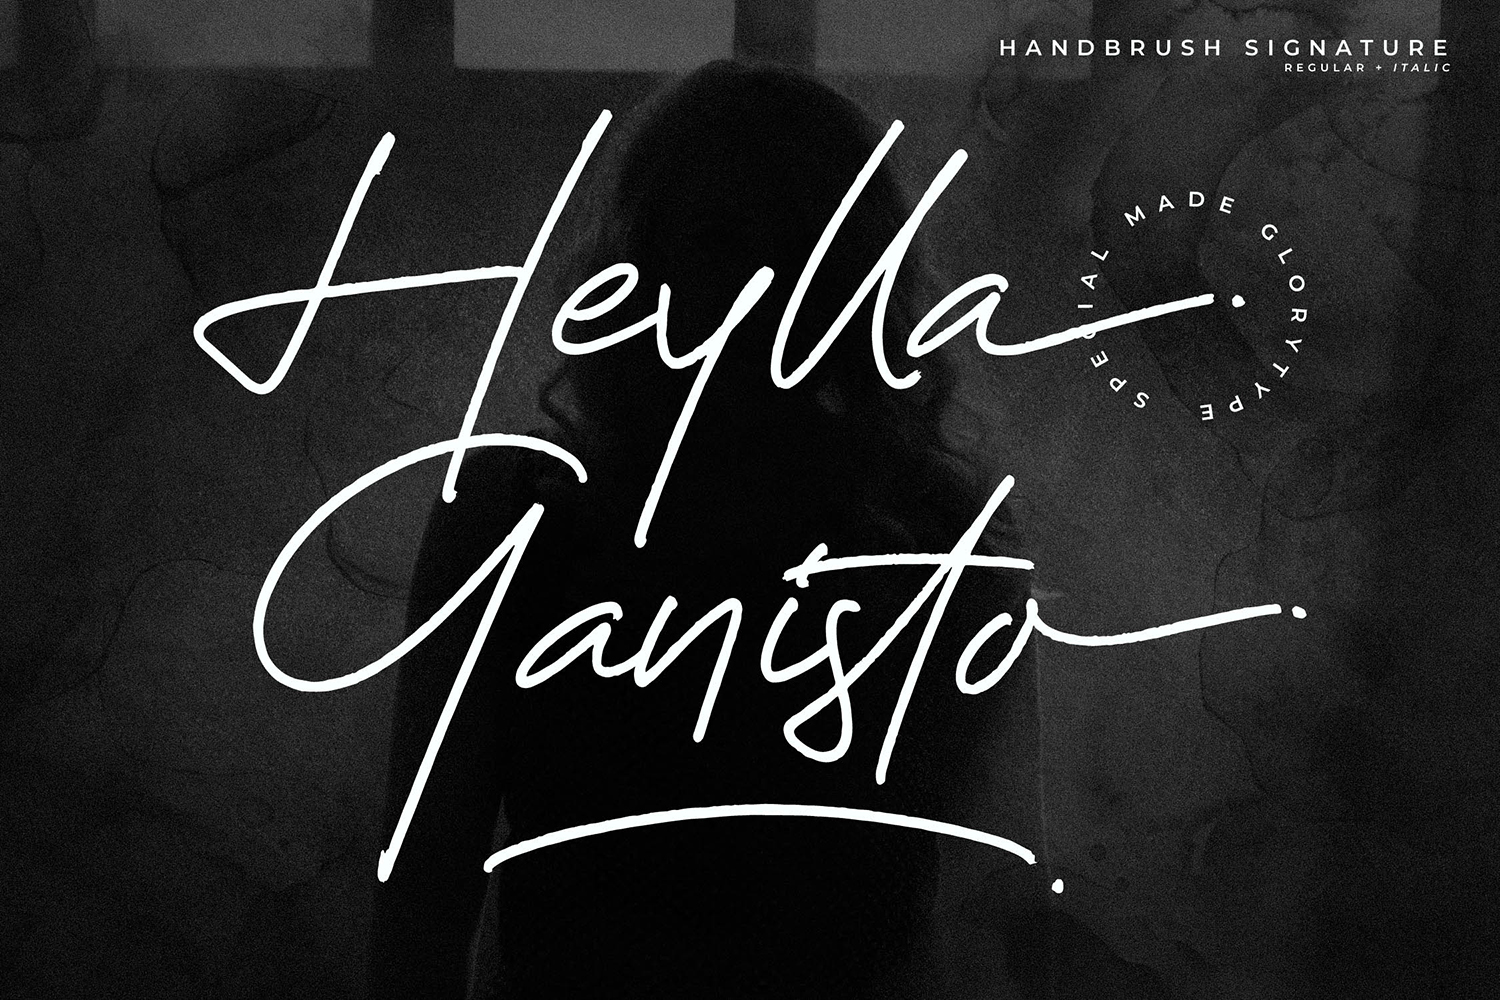 Heylla Ganisto Free Font